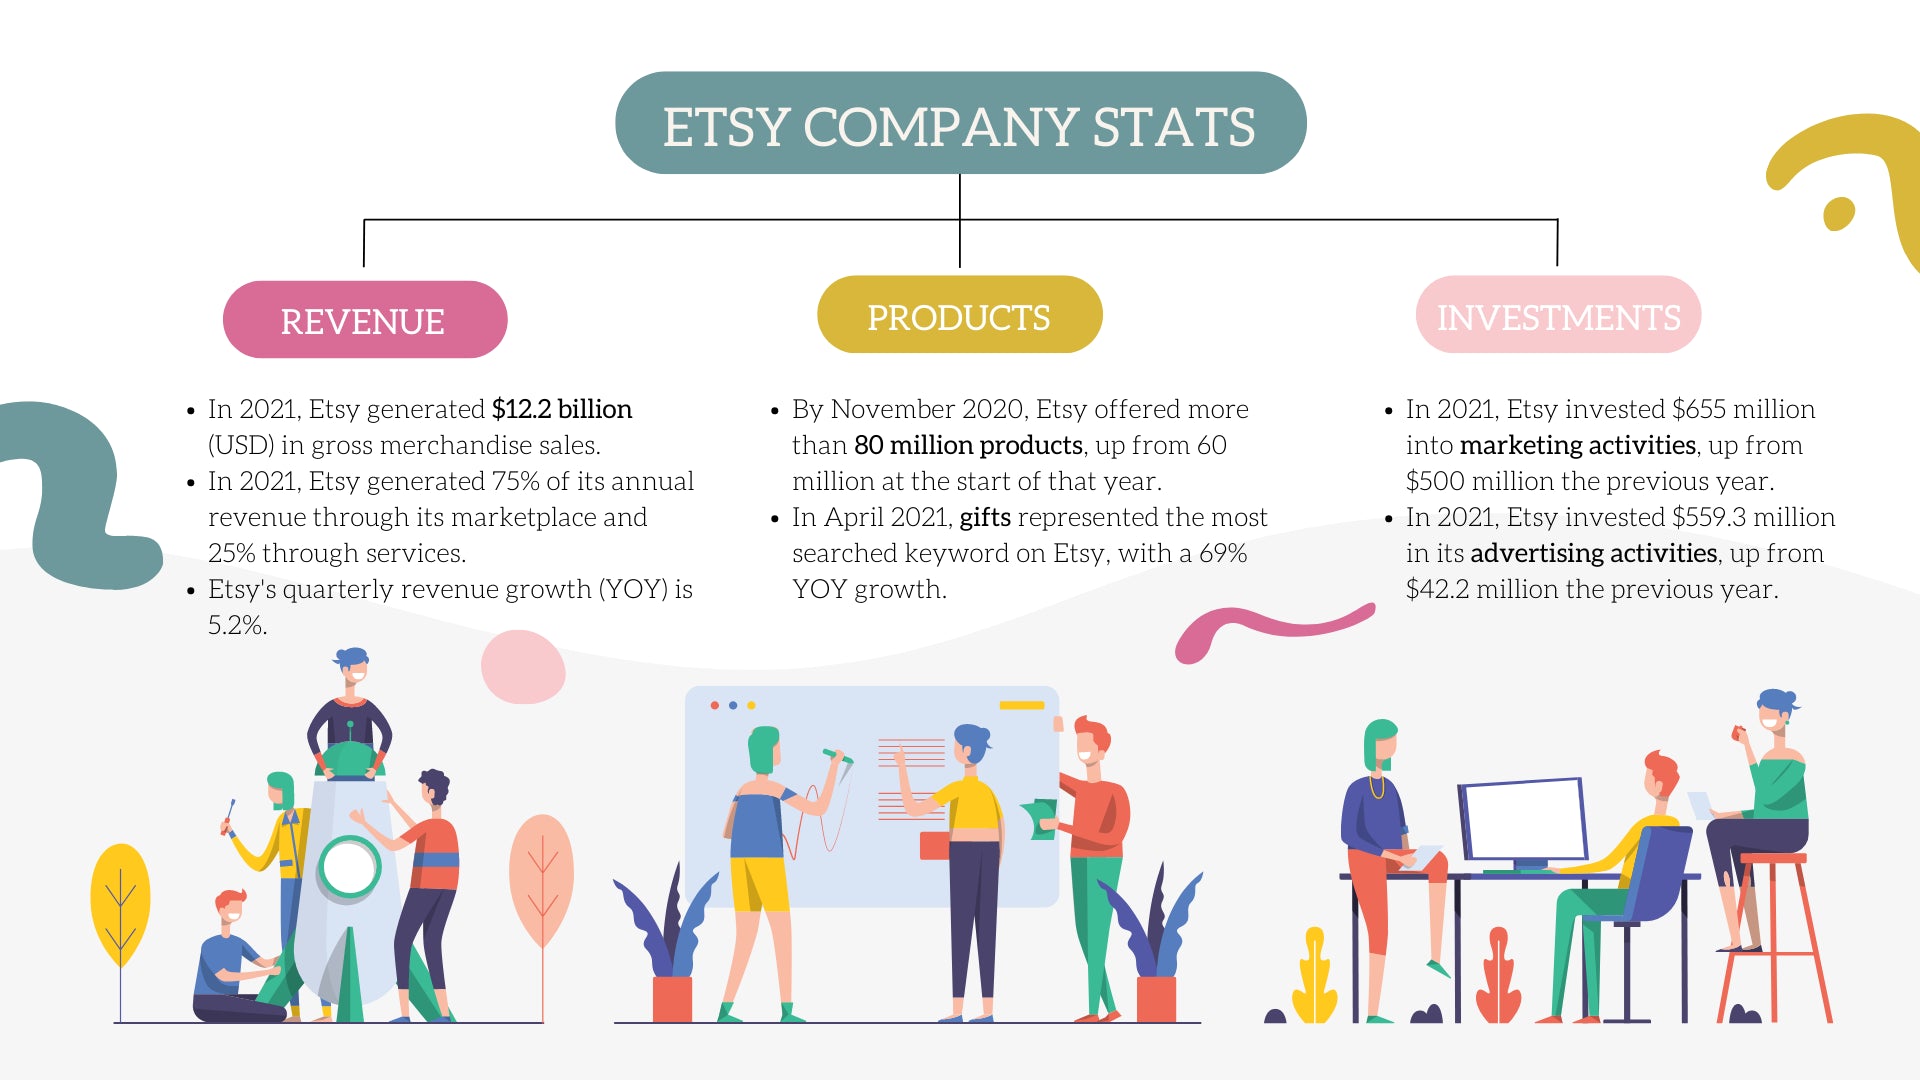 Etsy Statistics: Etsy Company Stats